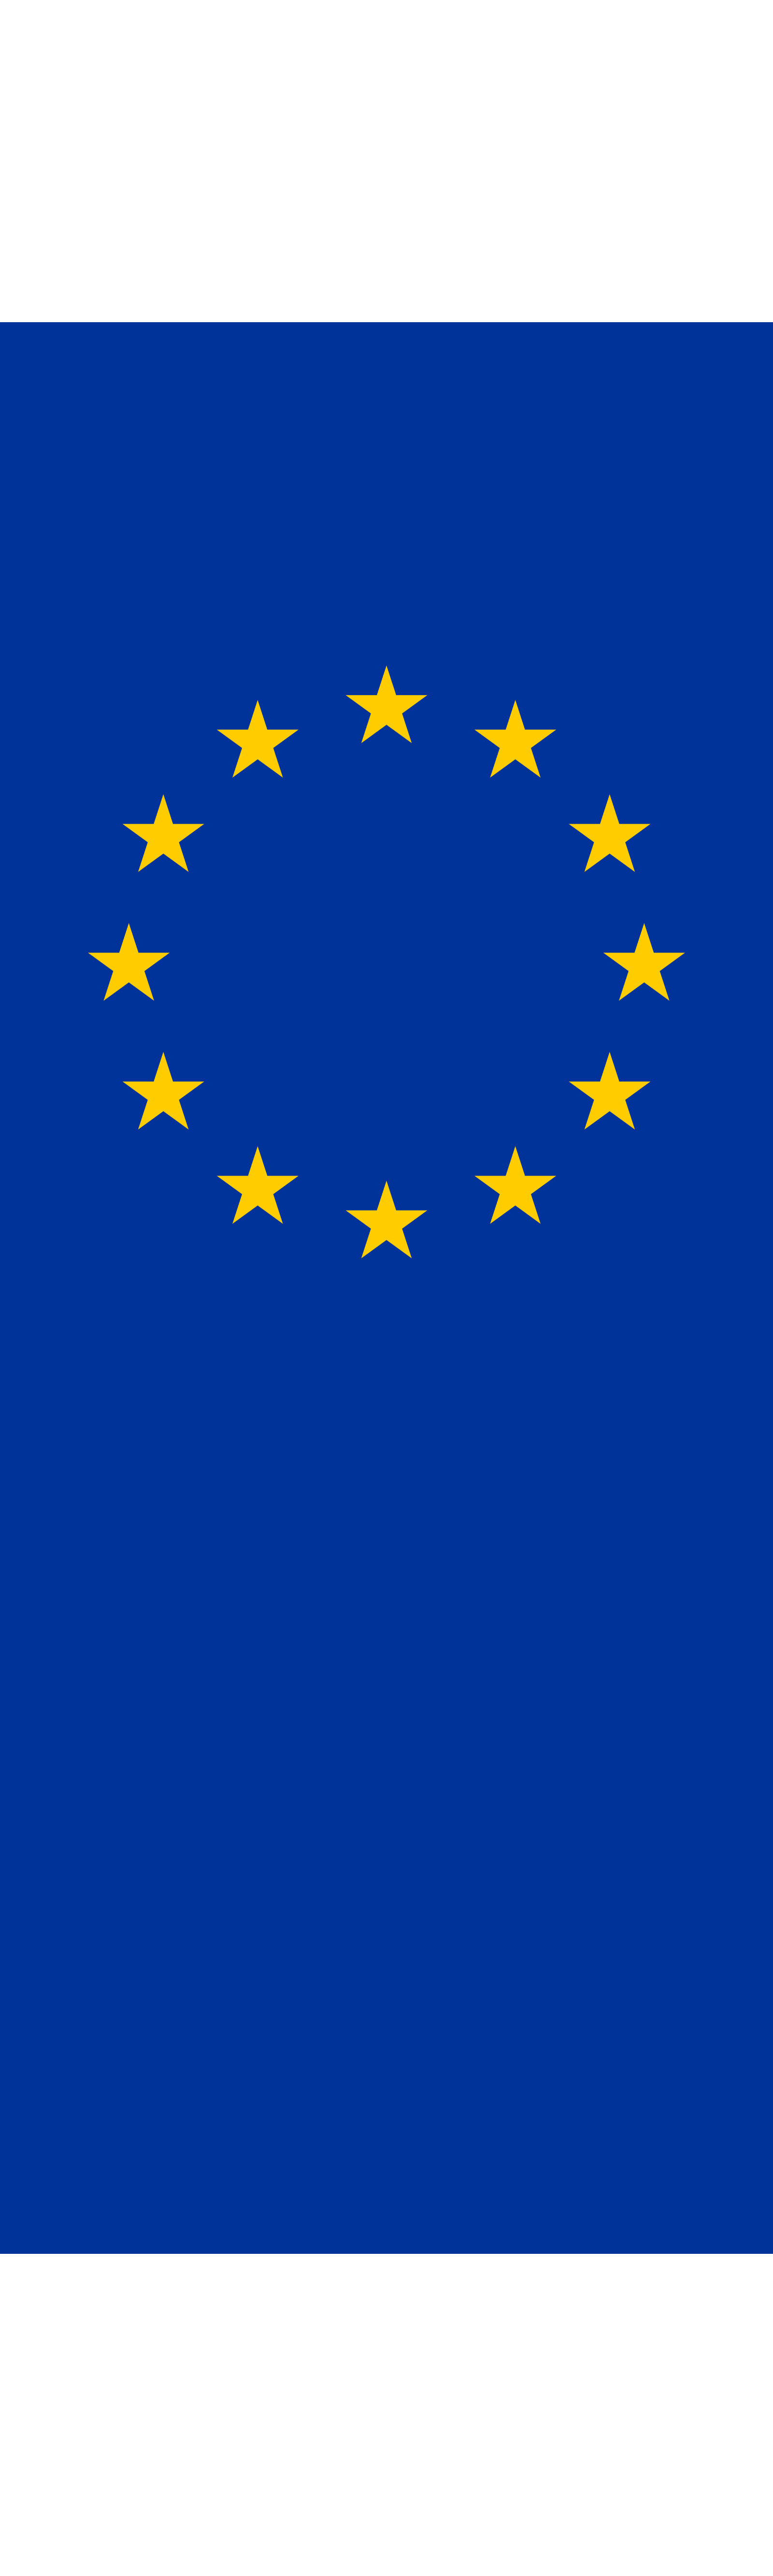 flag-of-eu-png-svg-clip-art-for-web-download-clip-art-png-icon-arts